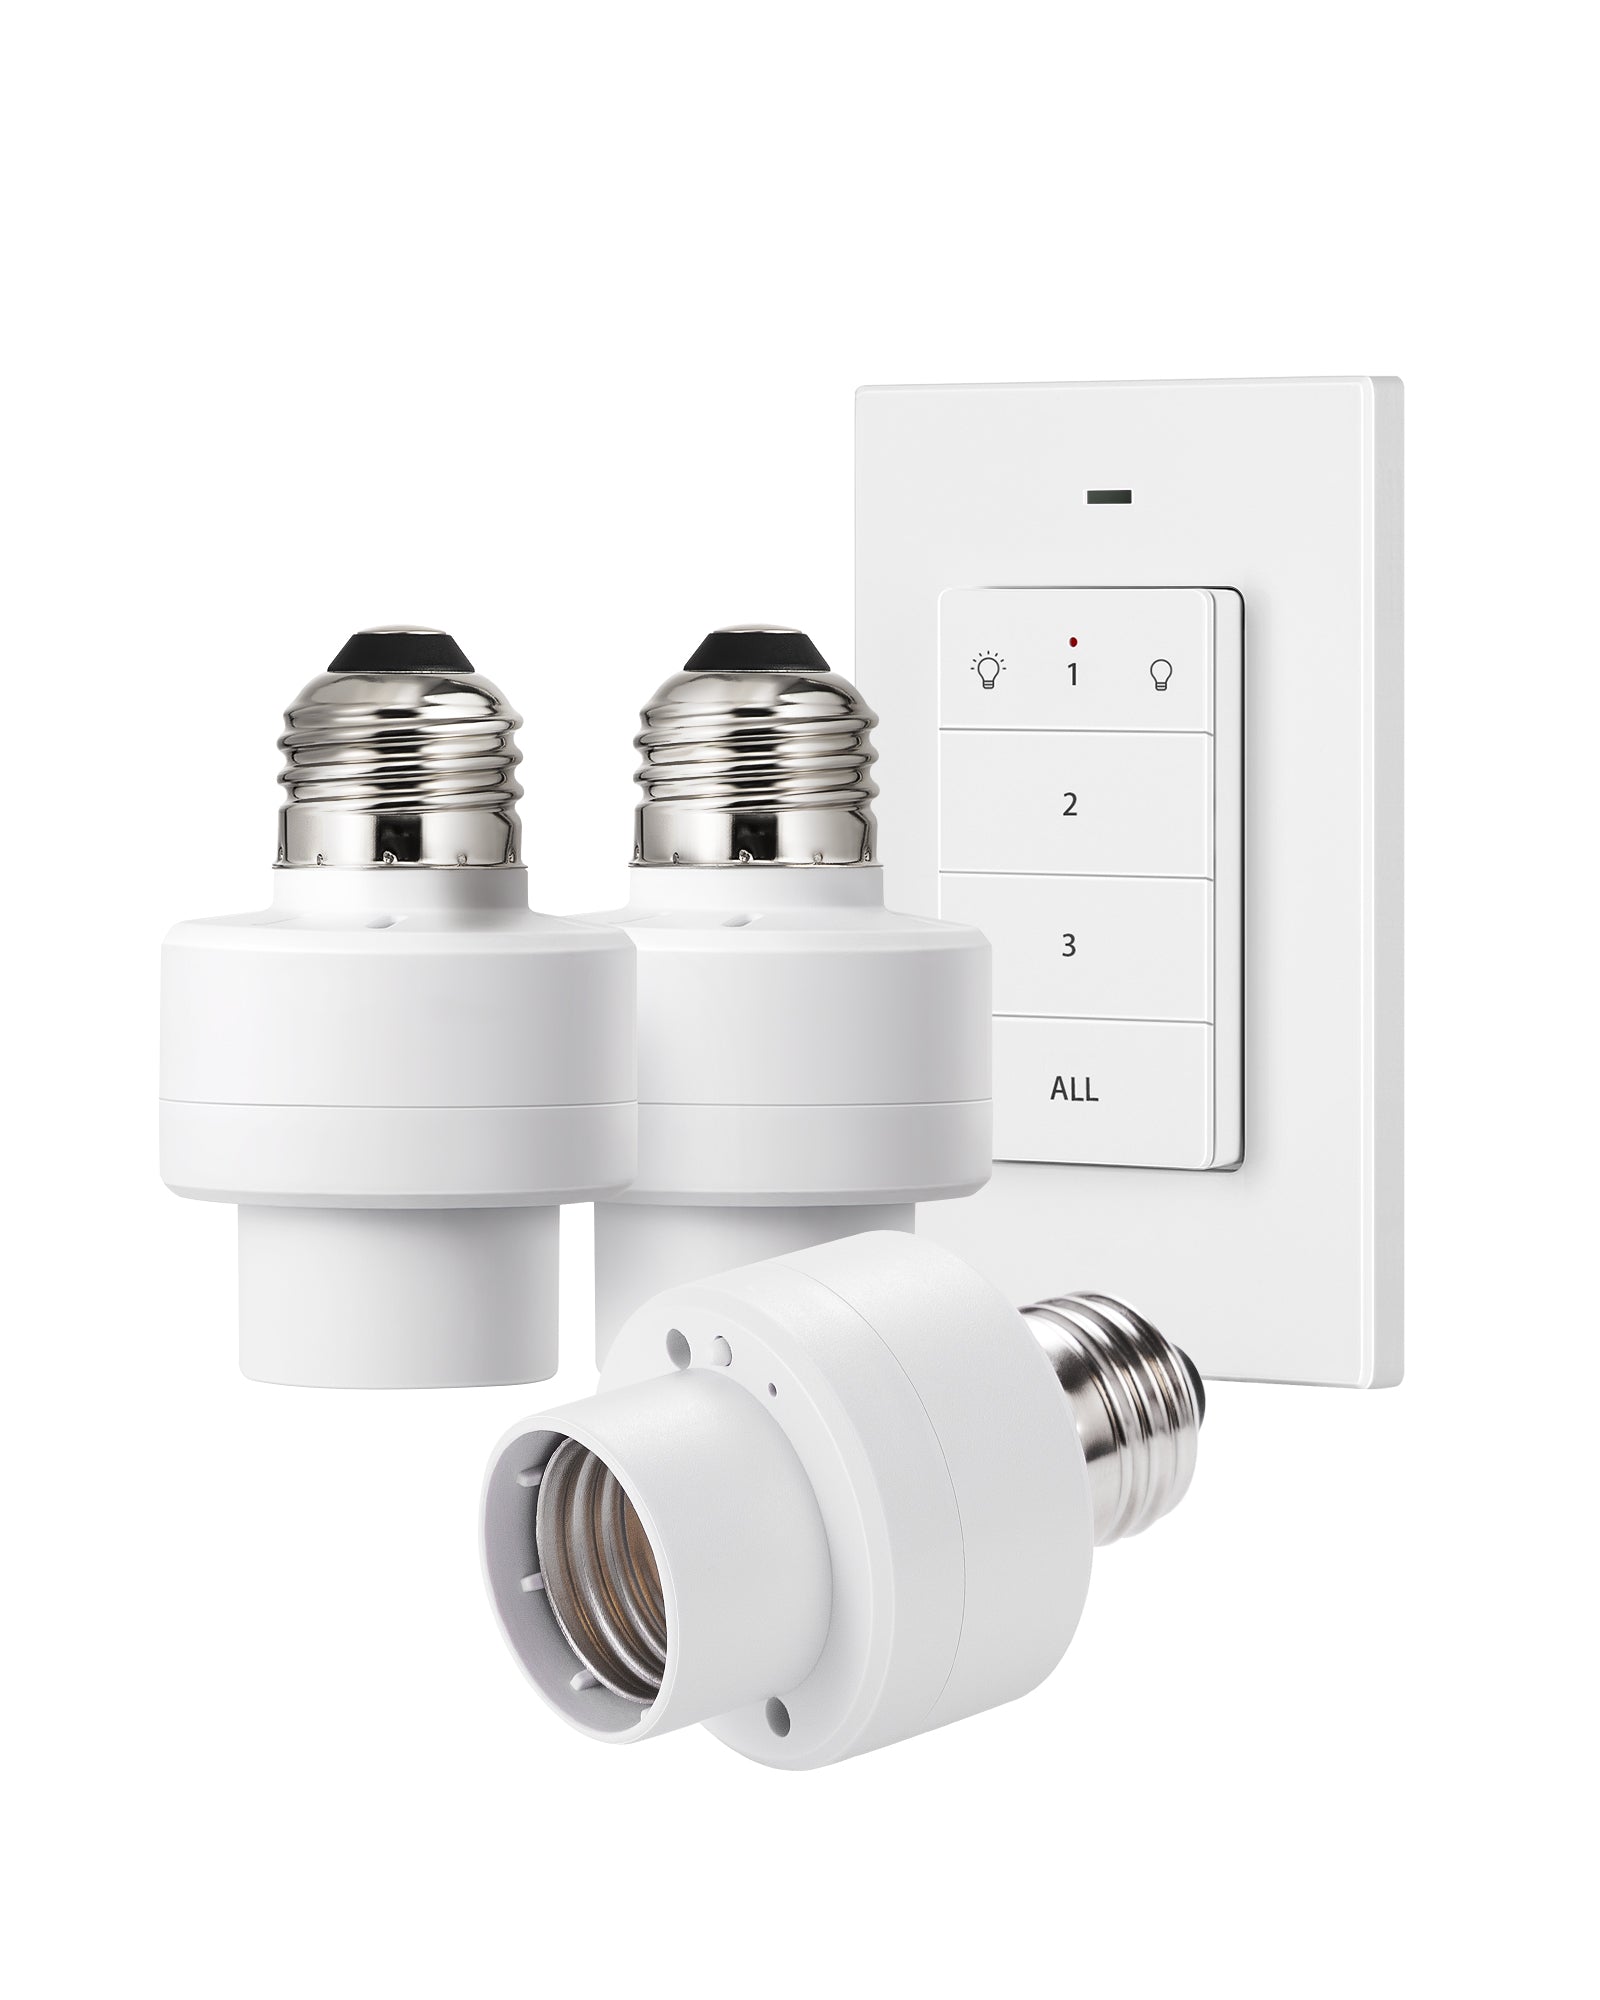 DEWENWILS Remote Control Light Socket, Wireless Remote Control Lamp Bulb  Socket with Switch for Pull Chain Light Fixtures, 100FT Range, No Wiring